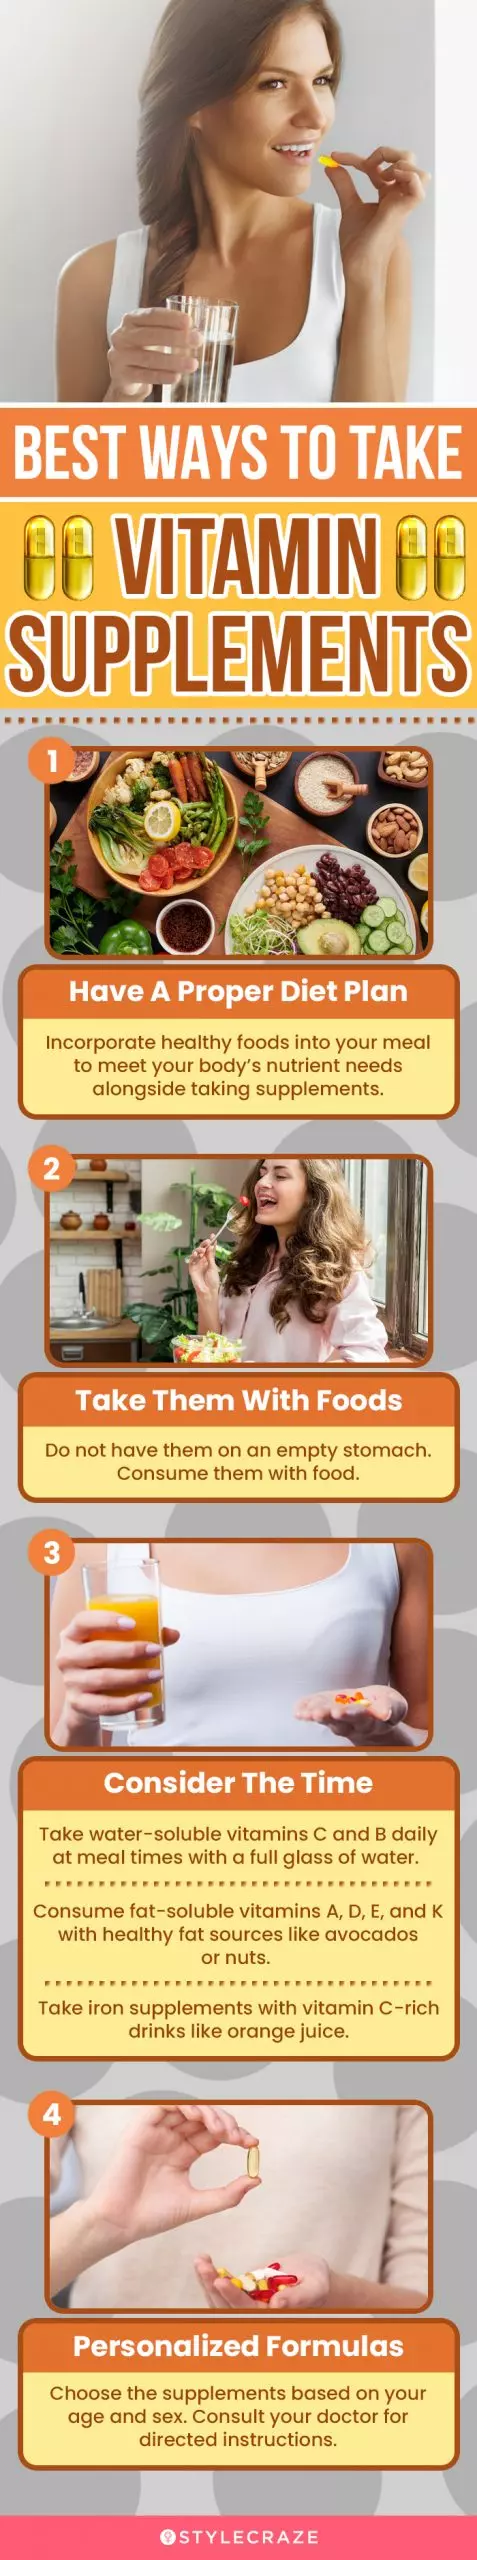 Best Ways To Take Vitamin Supplements (infographic)